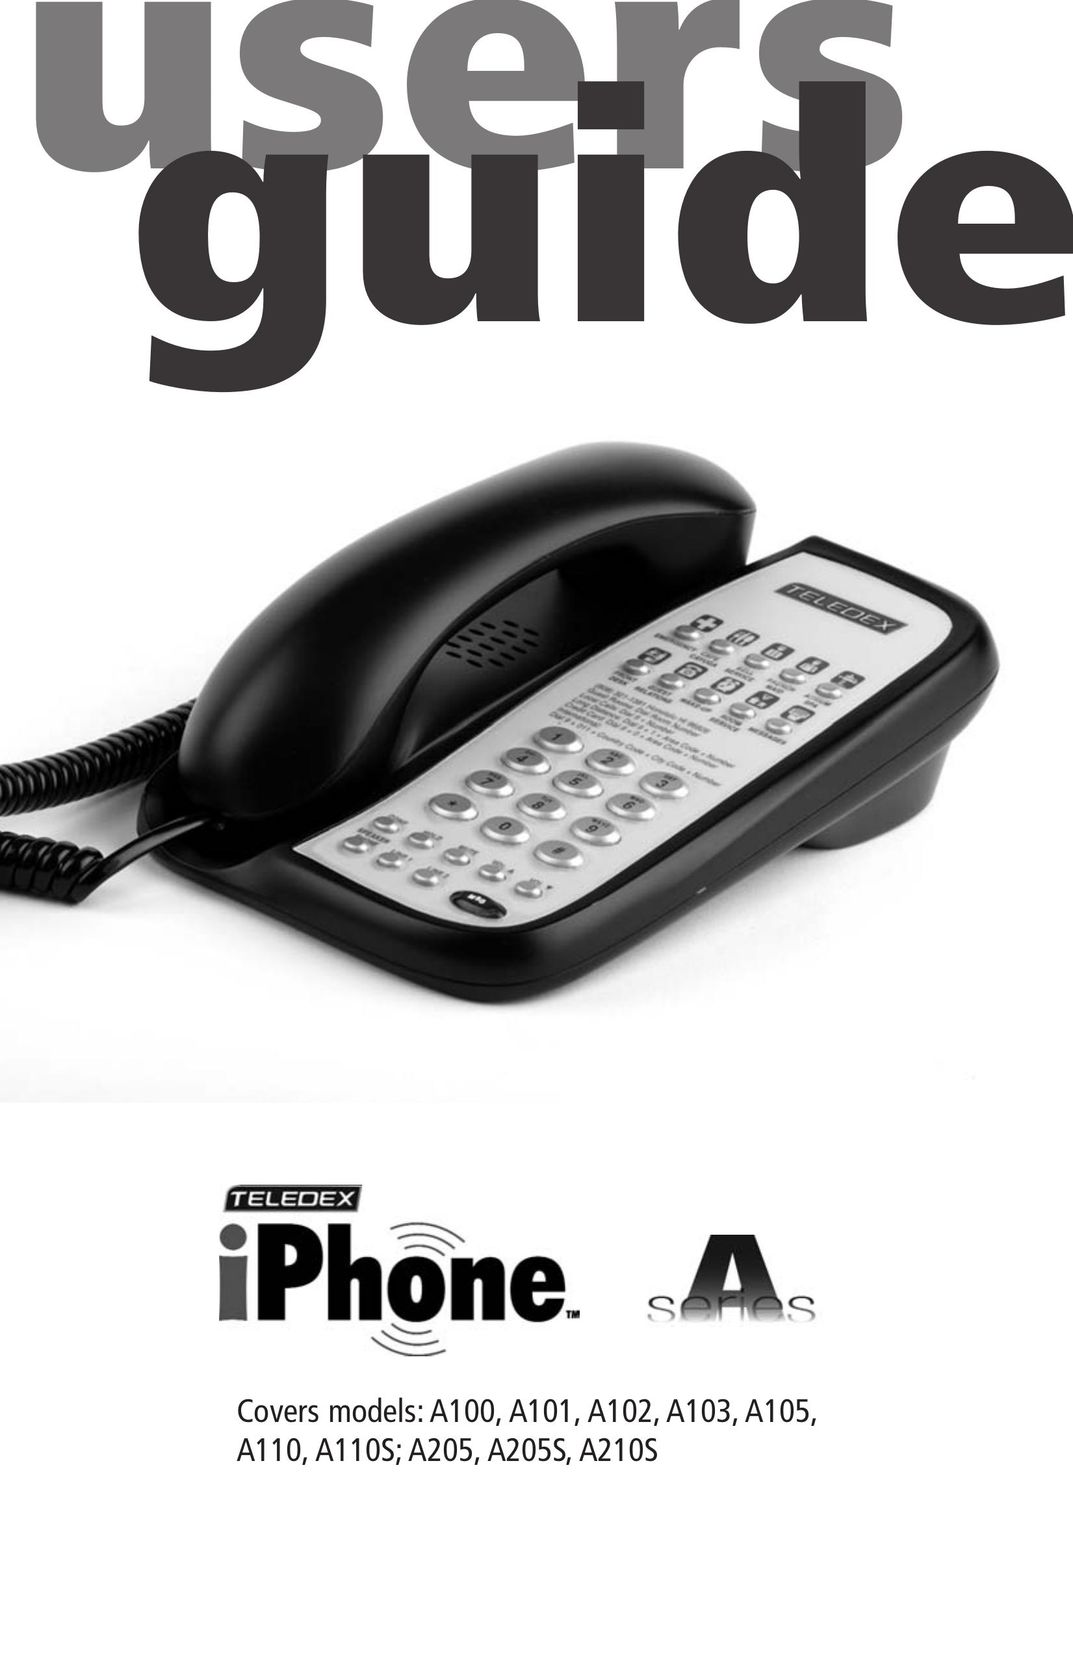 Teledex A210S Telephone User Manual